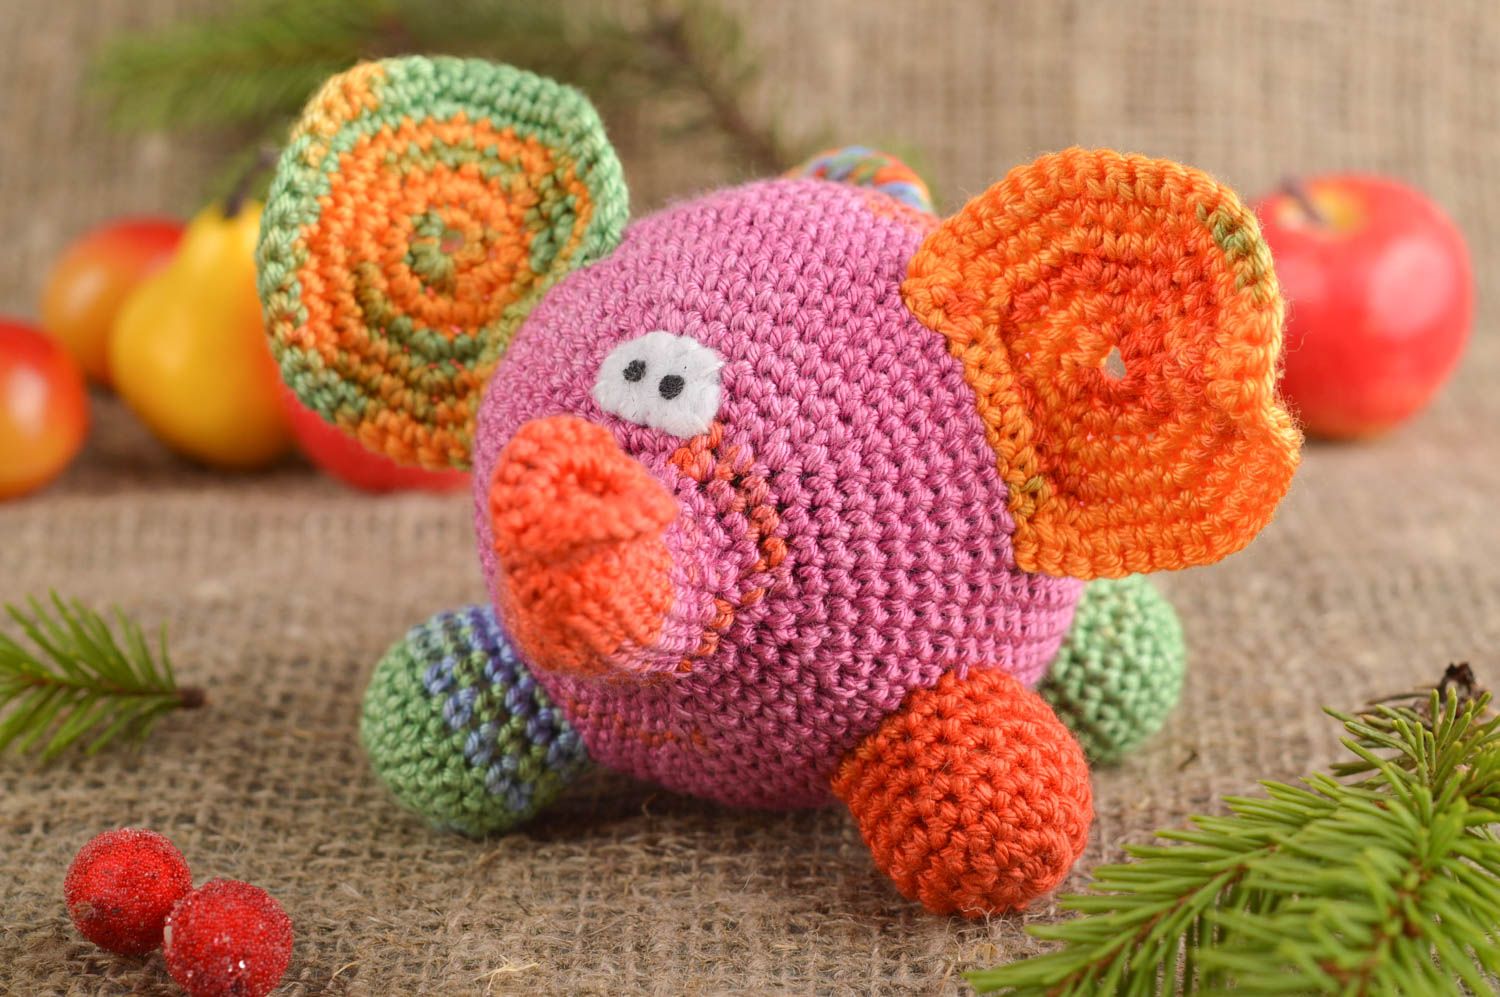 Handmade collectible toy crochet toy stuffed animals nursery decor elephant toy photo 1